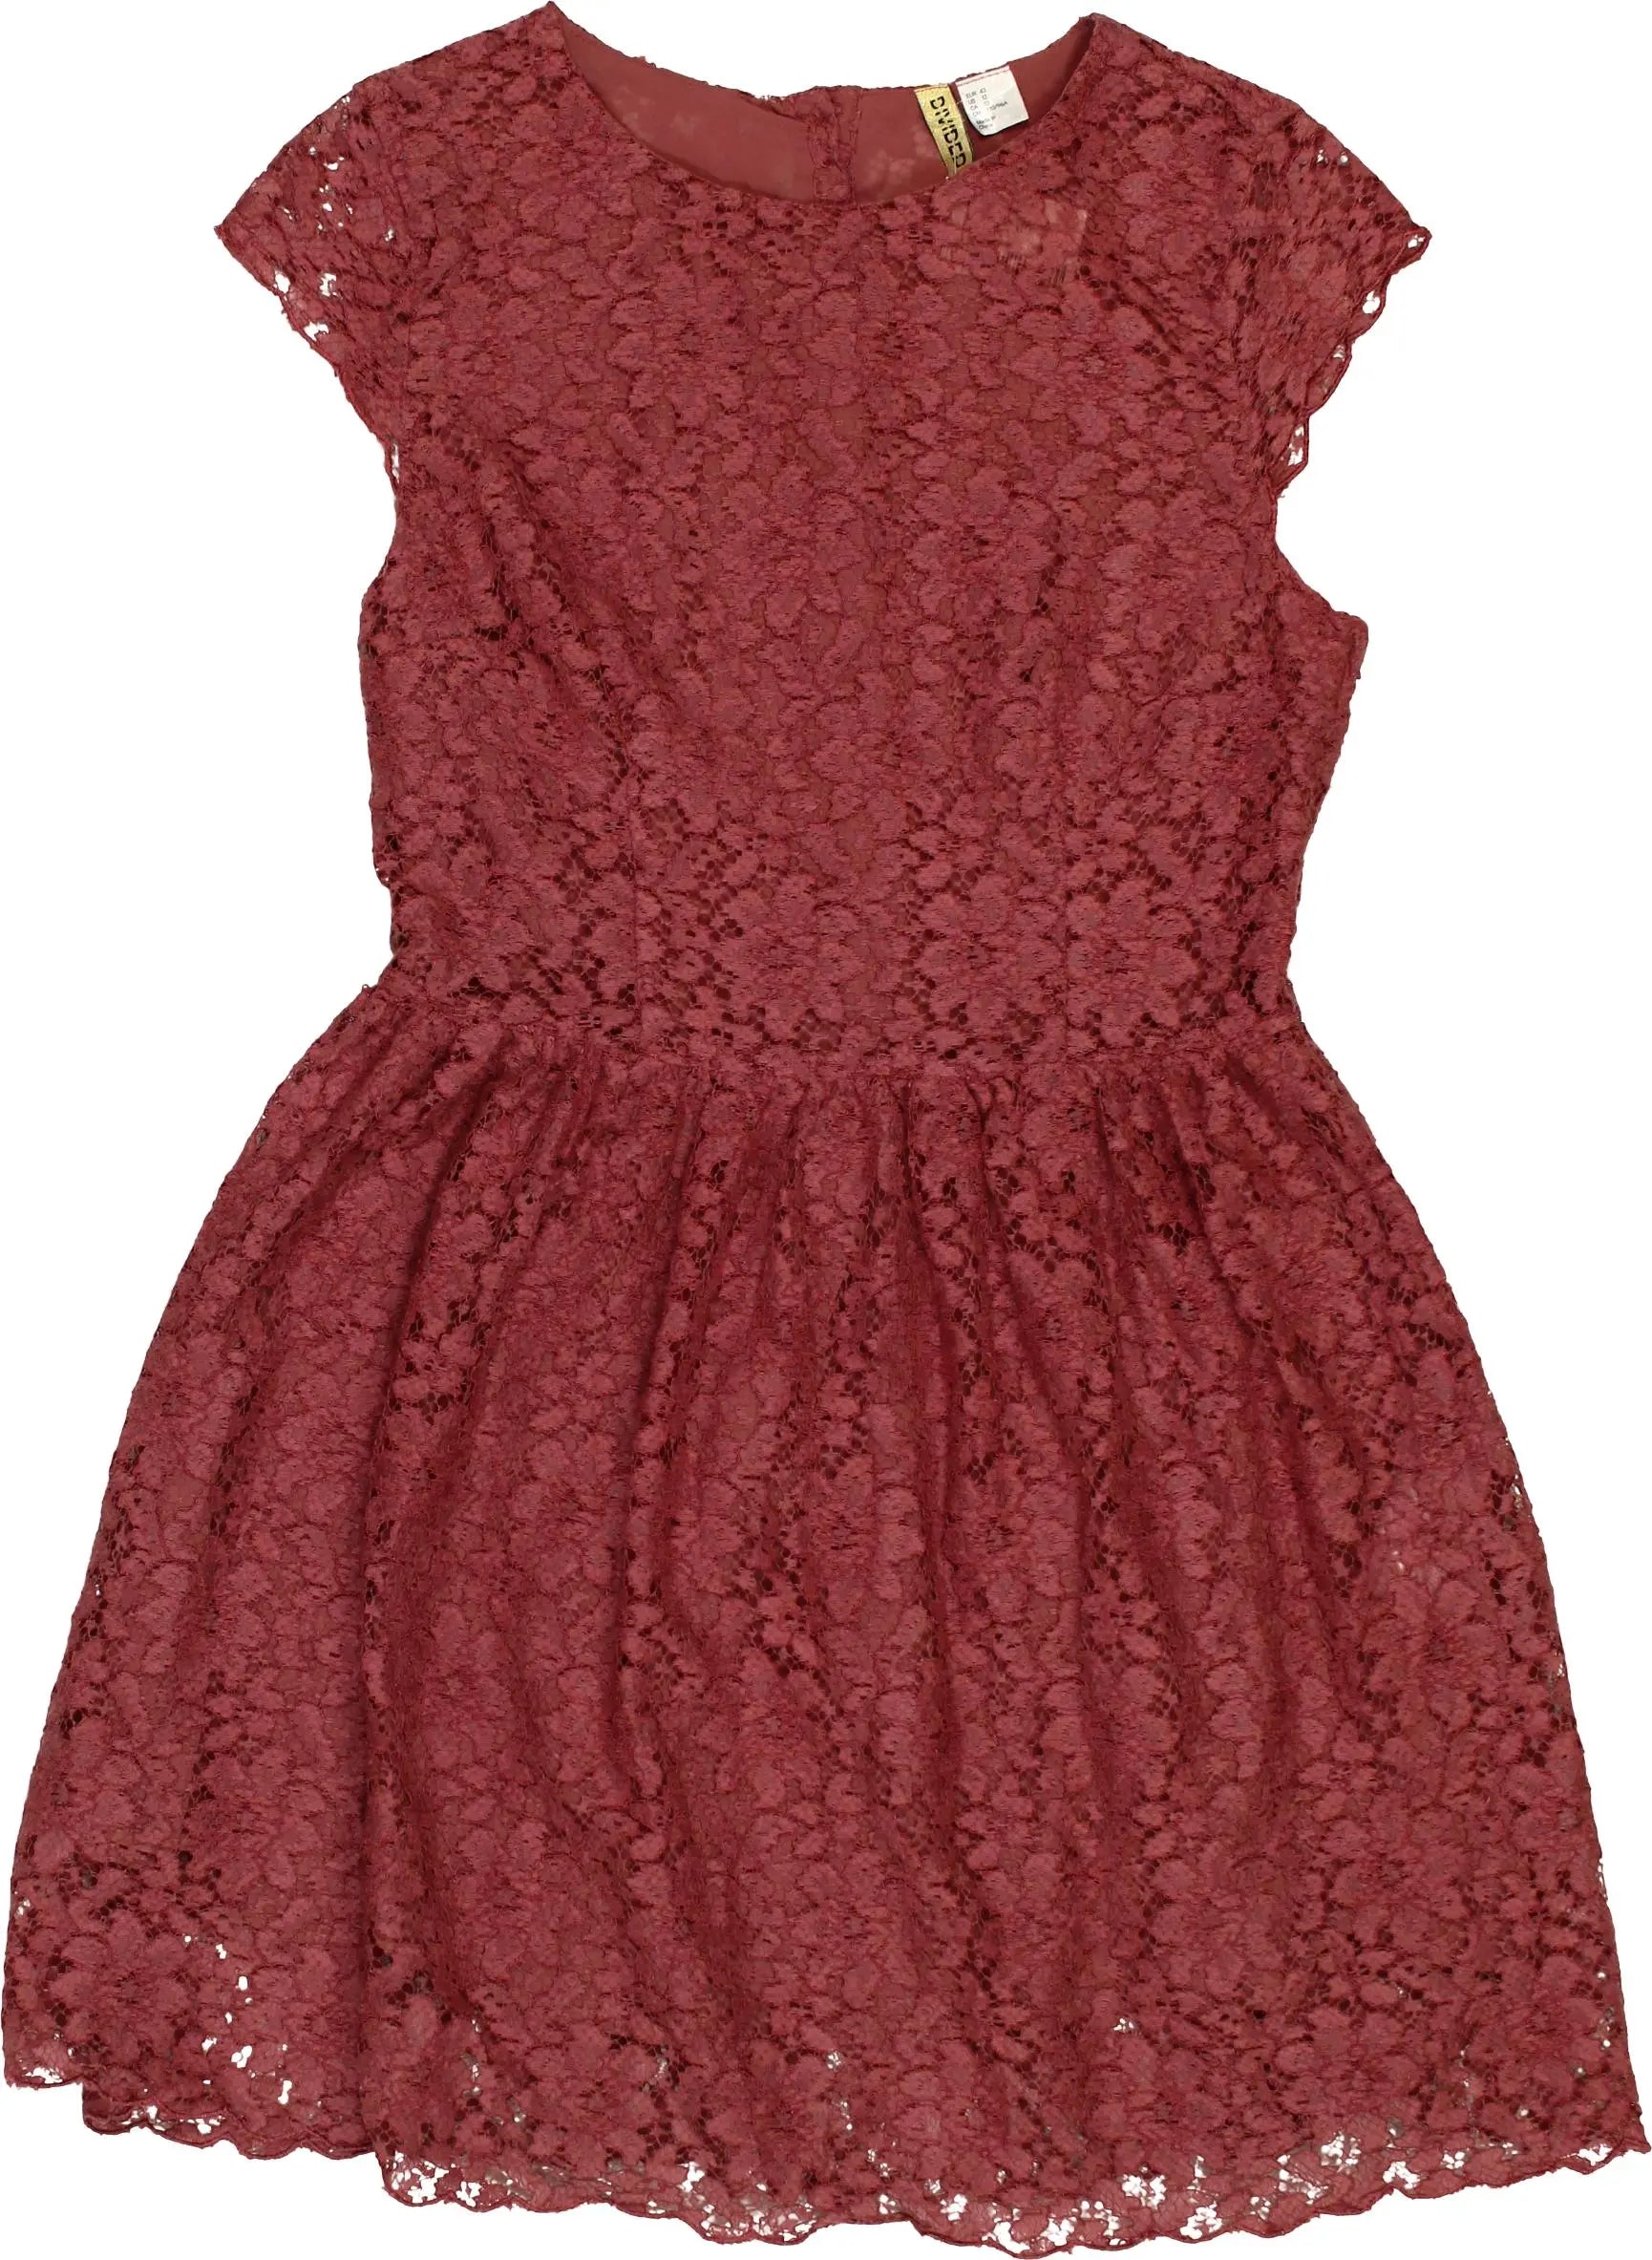 H&M - Mauve Lace Dress- ThriftTale.com - Vintage and second handclothing